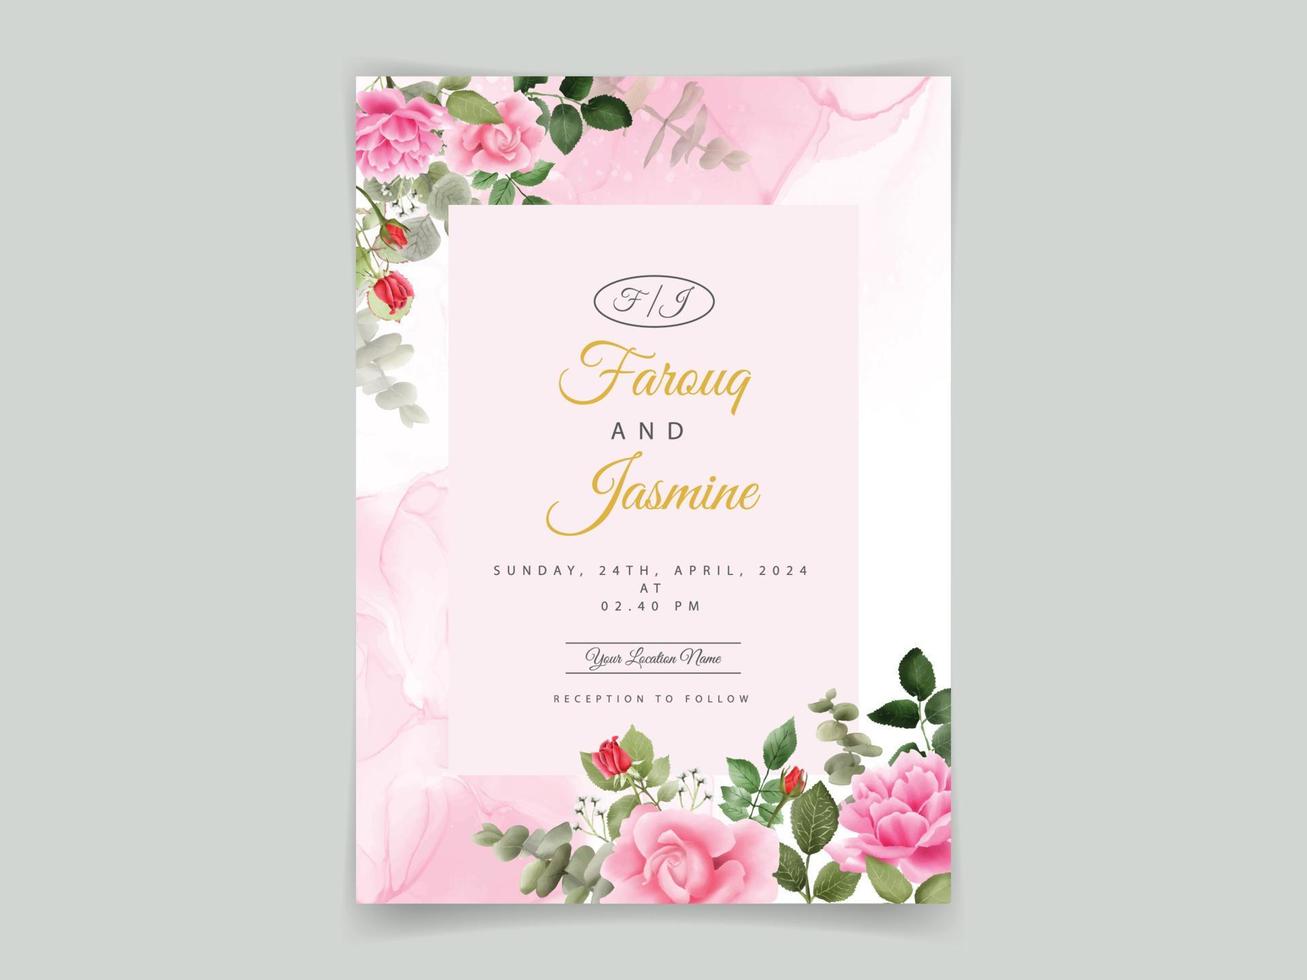 Hand drawn rose wedding invitation card vector